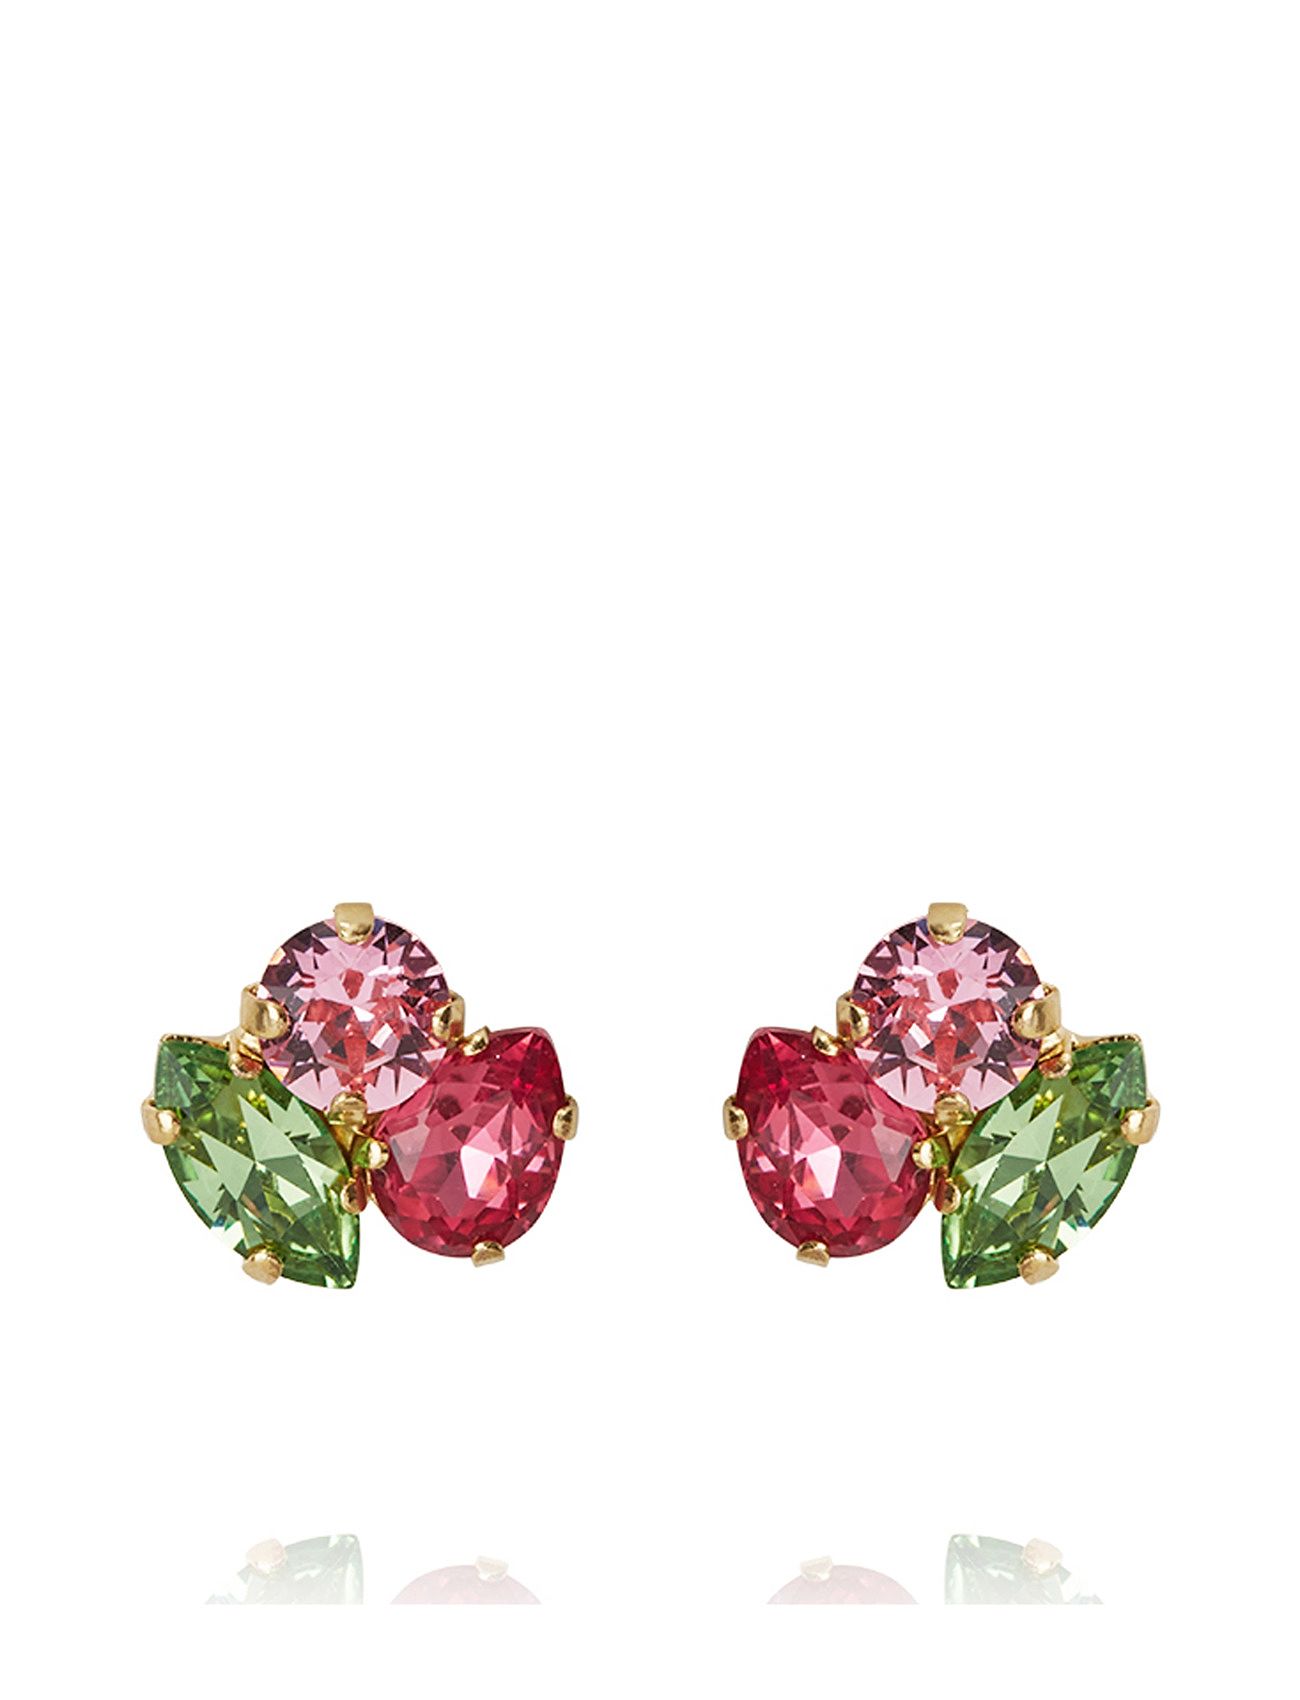 Ana Earrings Gold Accessories Jewellery Earrings Studs Red Caroline Svedbom